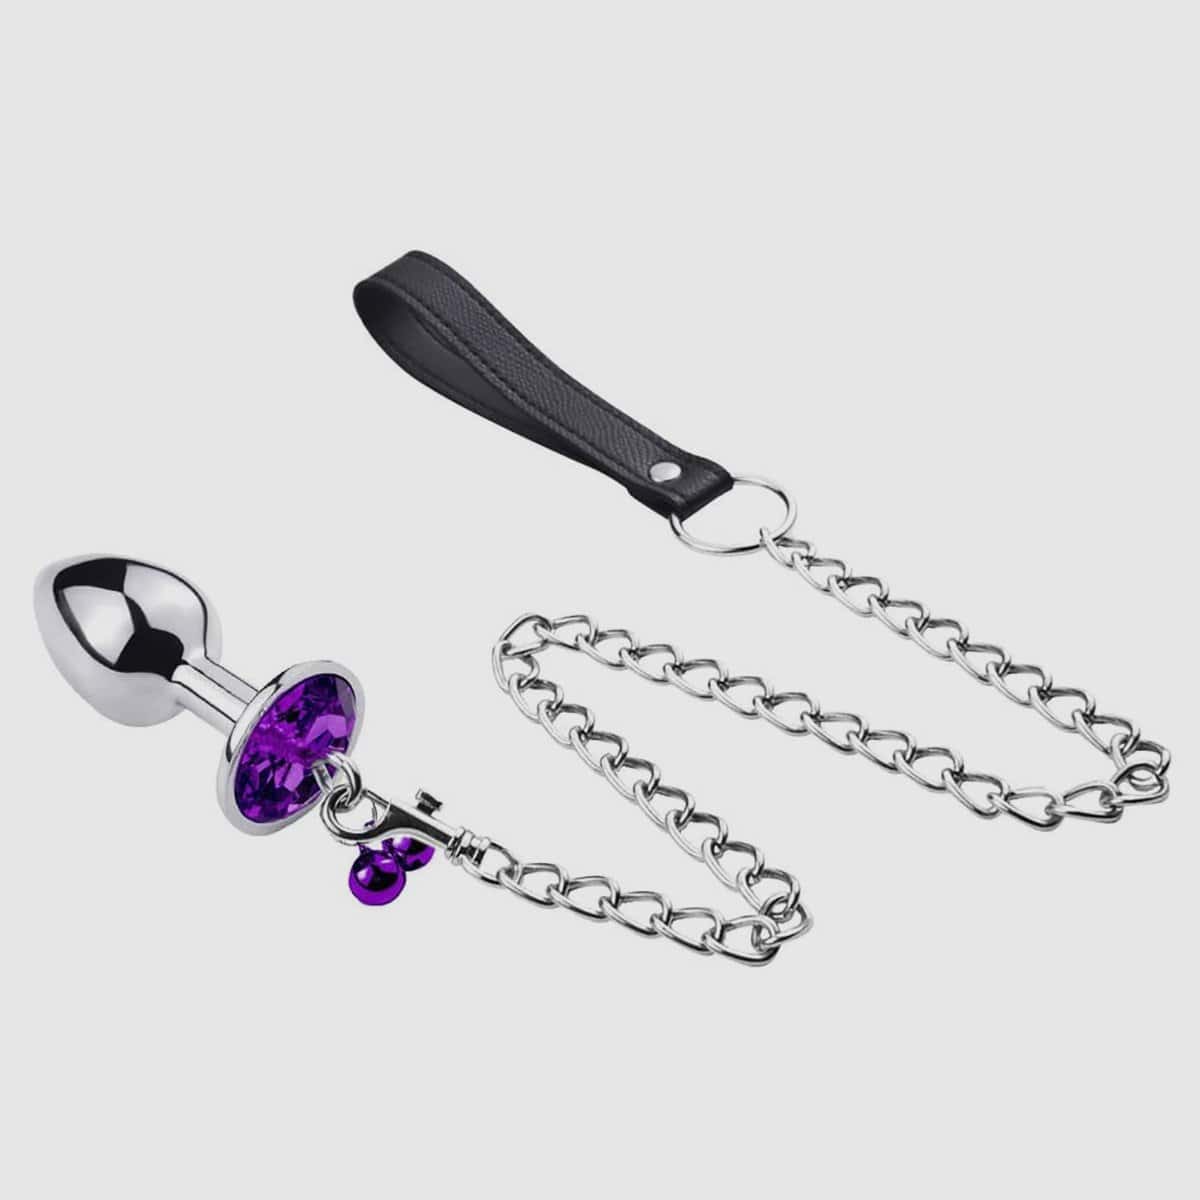 Shine Diamond Bell Plug with Leash - Purple, 3 Pcs Set - Thorn & Feather Sex Toy Canada